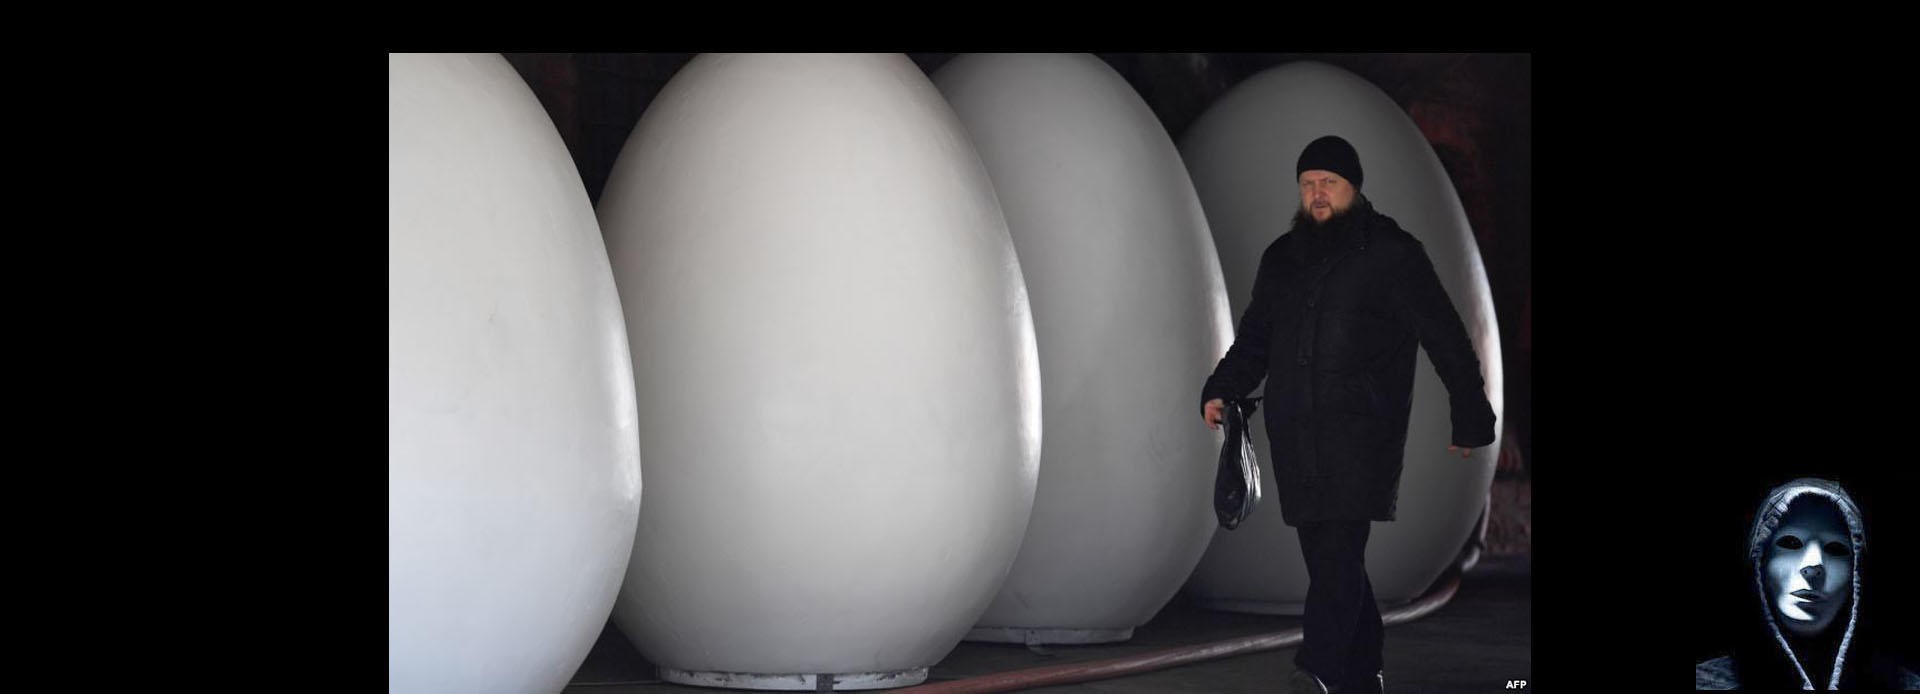 Громадное яйцо. Яйцо большое. Самое большое яйцо. Самое большое яйцо в мире.